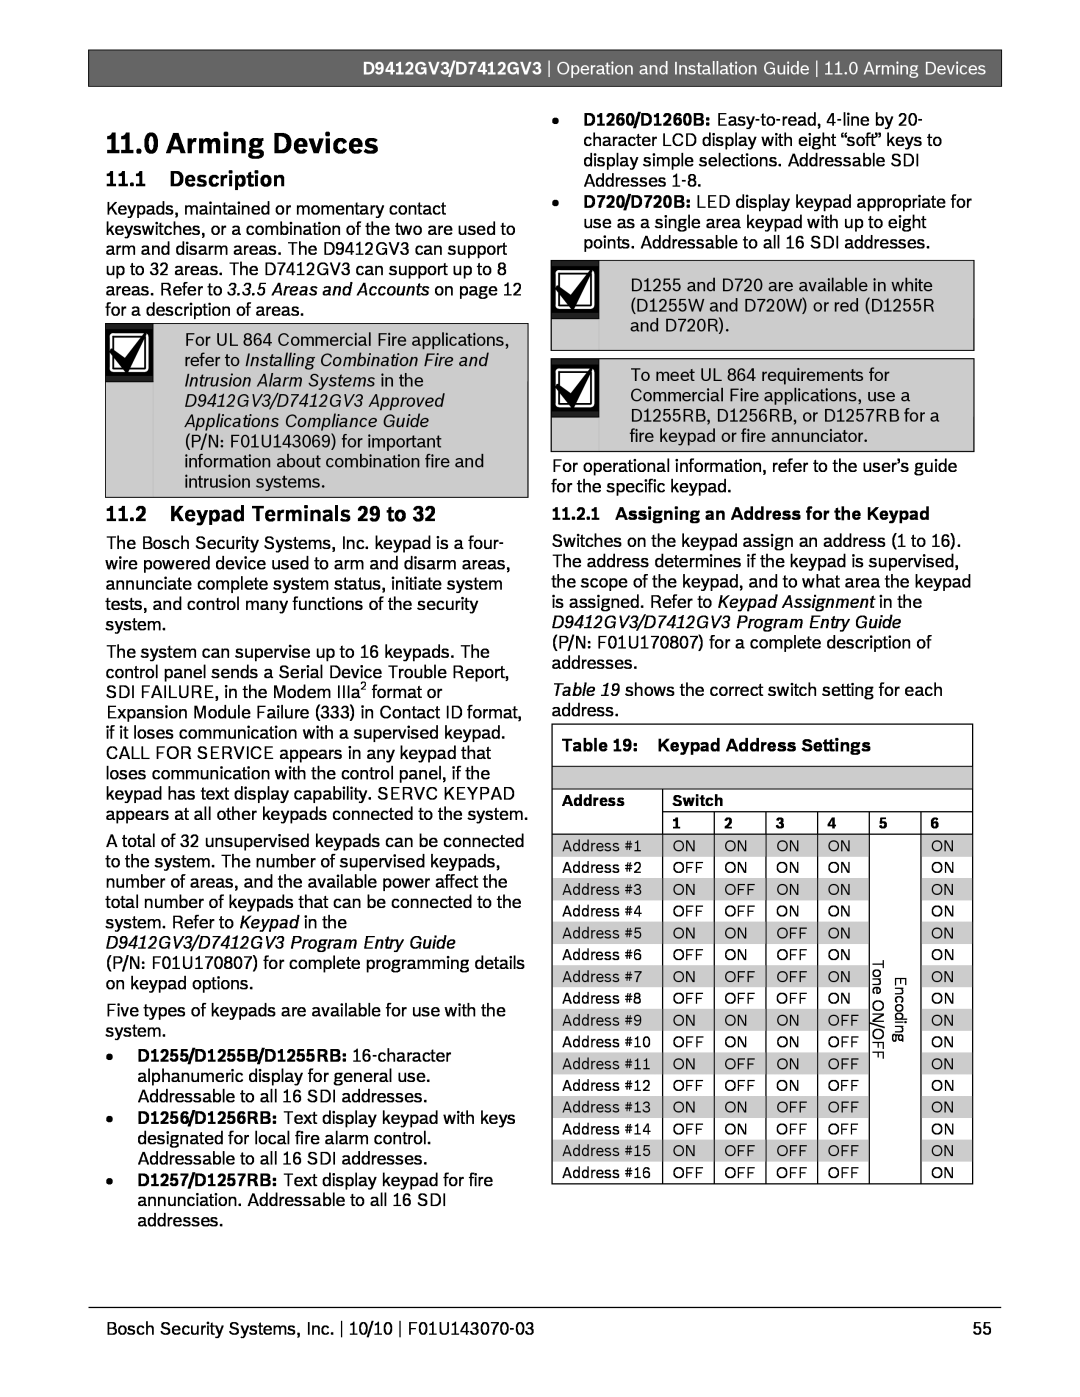 Bosch Appliances D7412GV3 manual 11.0Arming Devices, 11.1Description, 11.2Keypad Terminals 29 to, Keypad Address Settings 